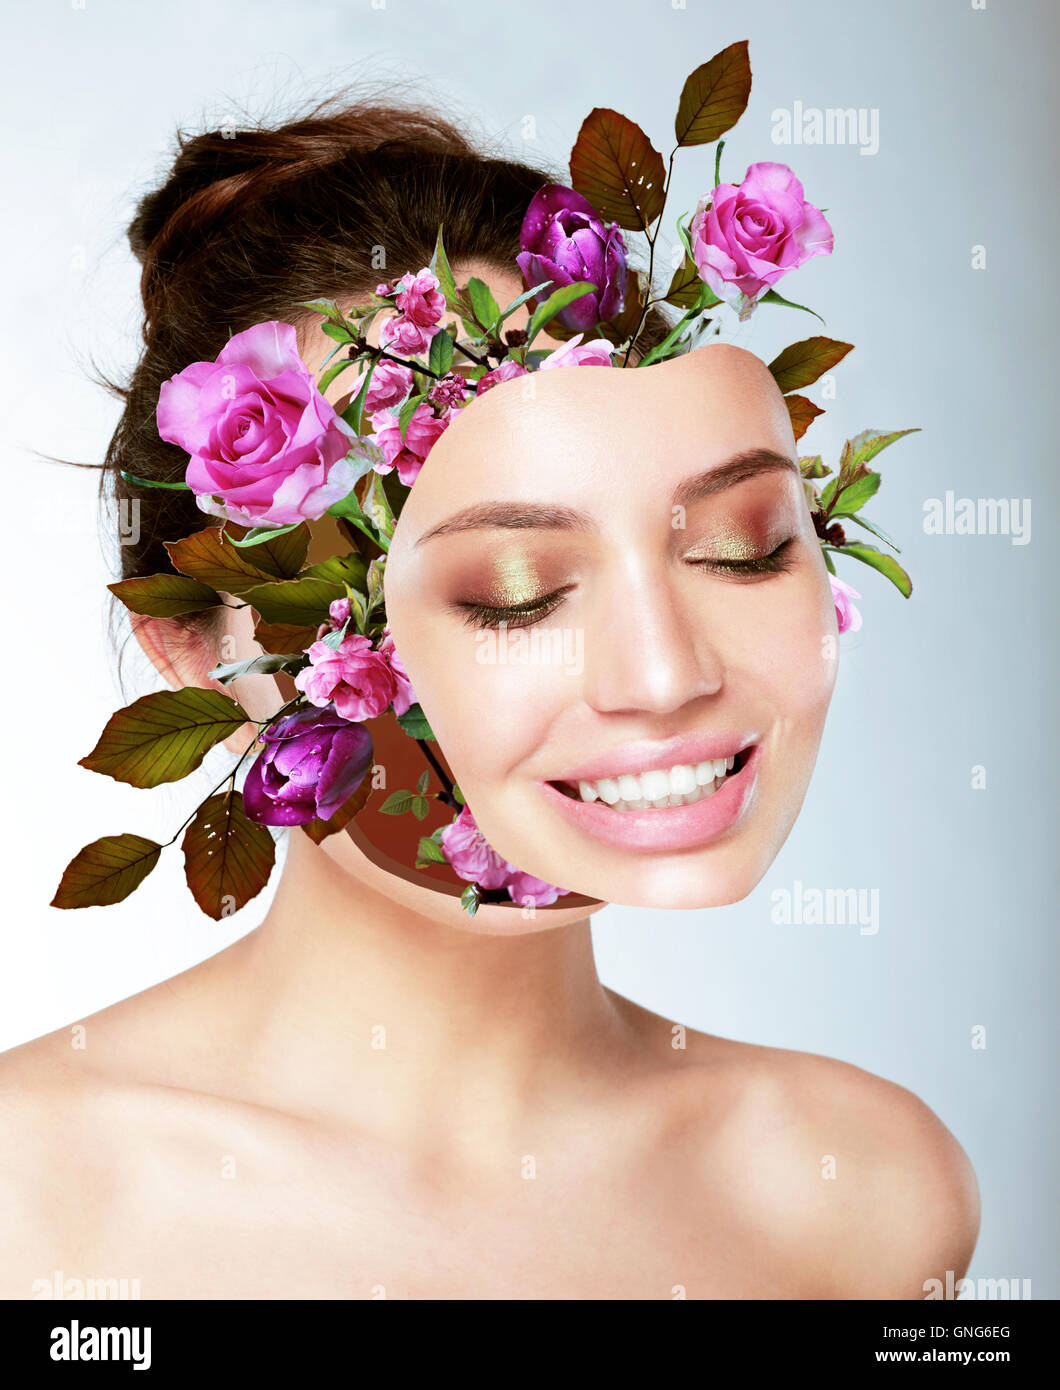 Art portrait of beautiful young women. Flowers, Mask, face. Concept, idea, design. Stock Photo